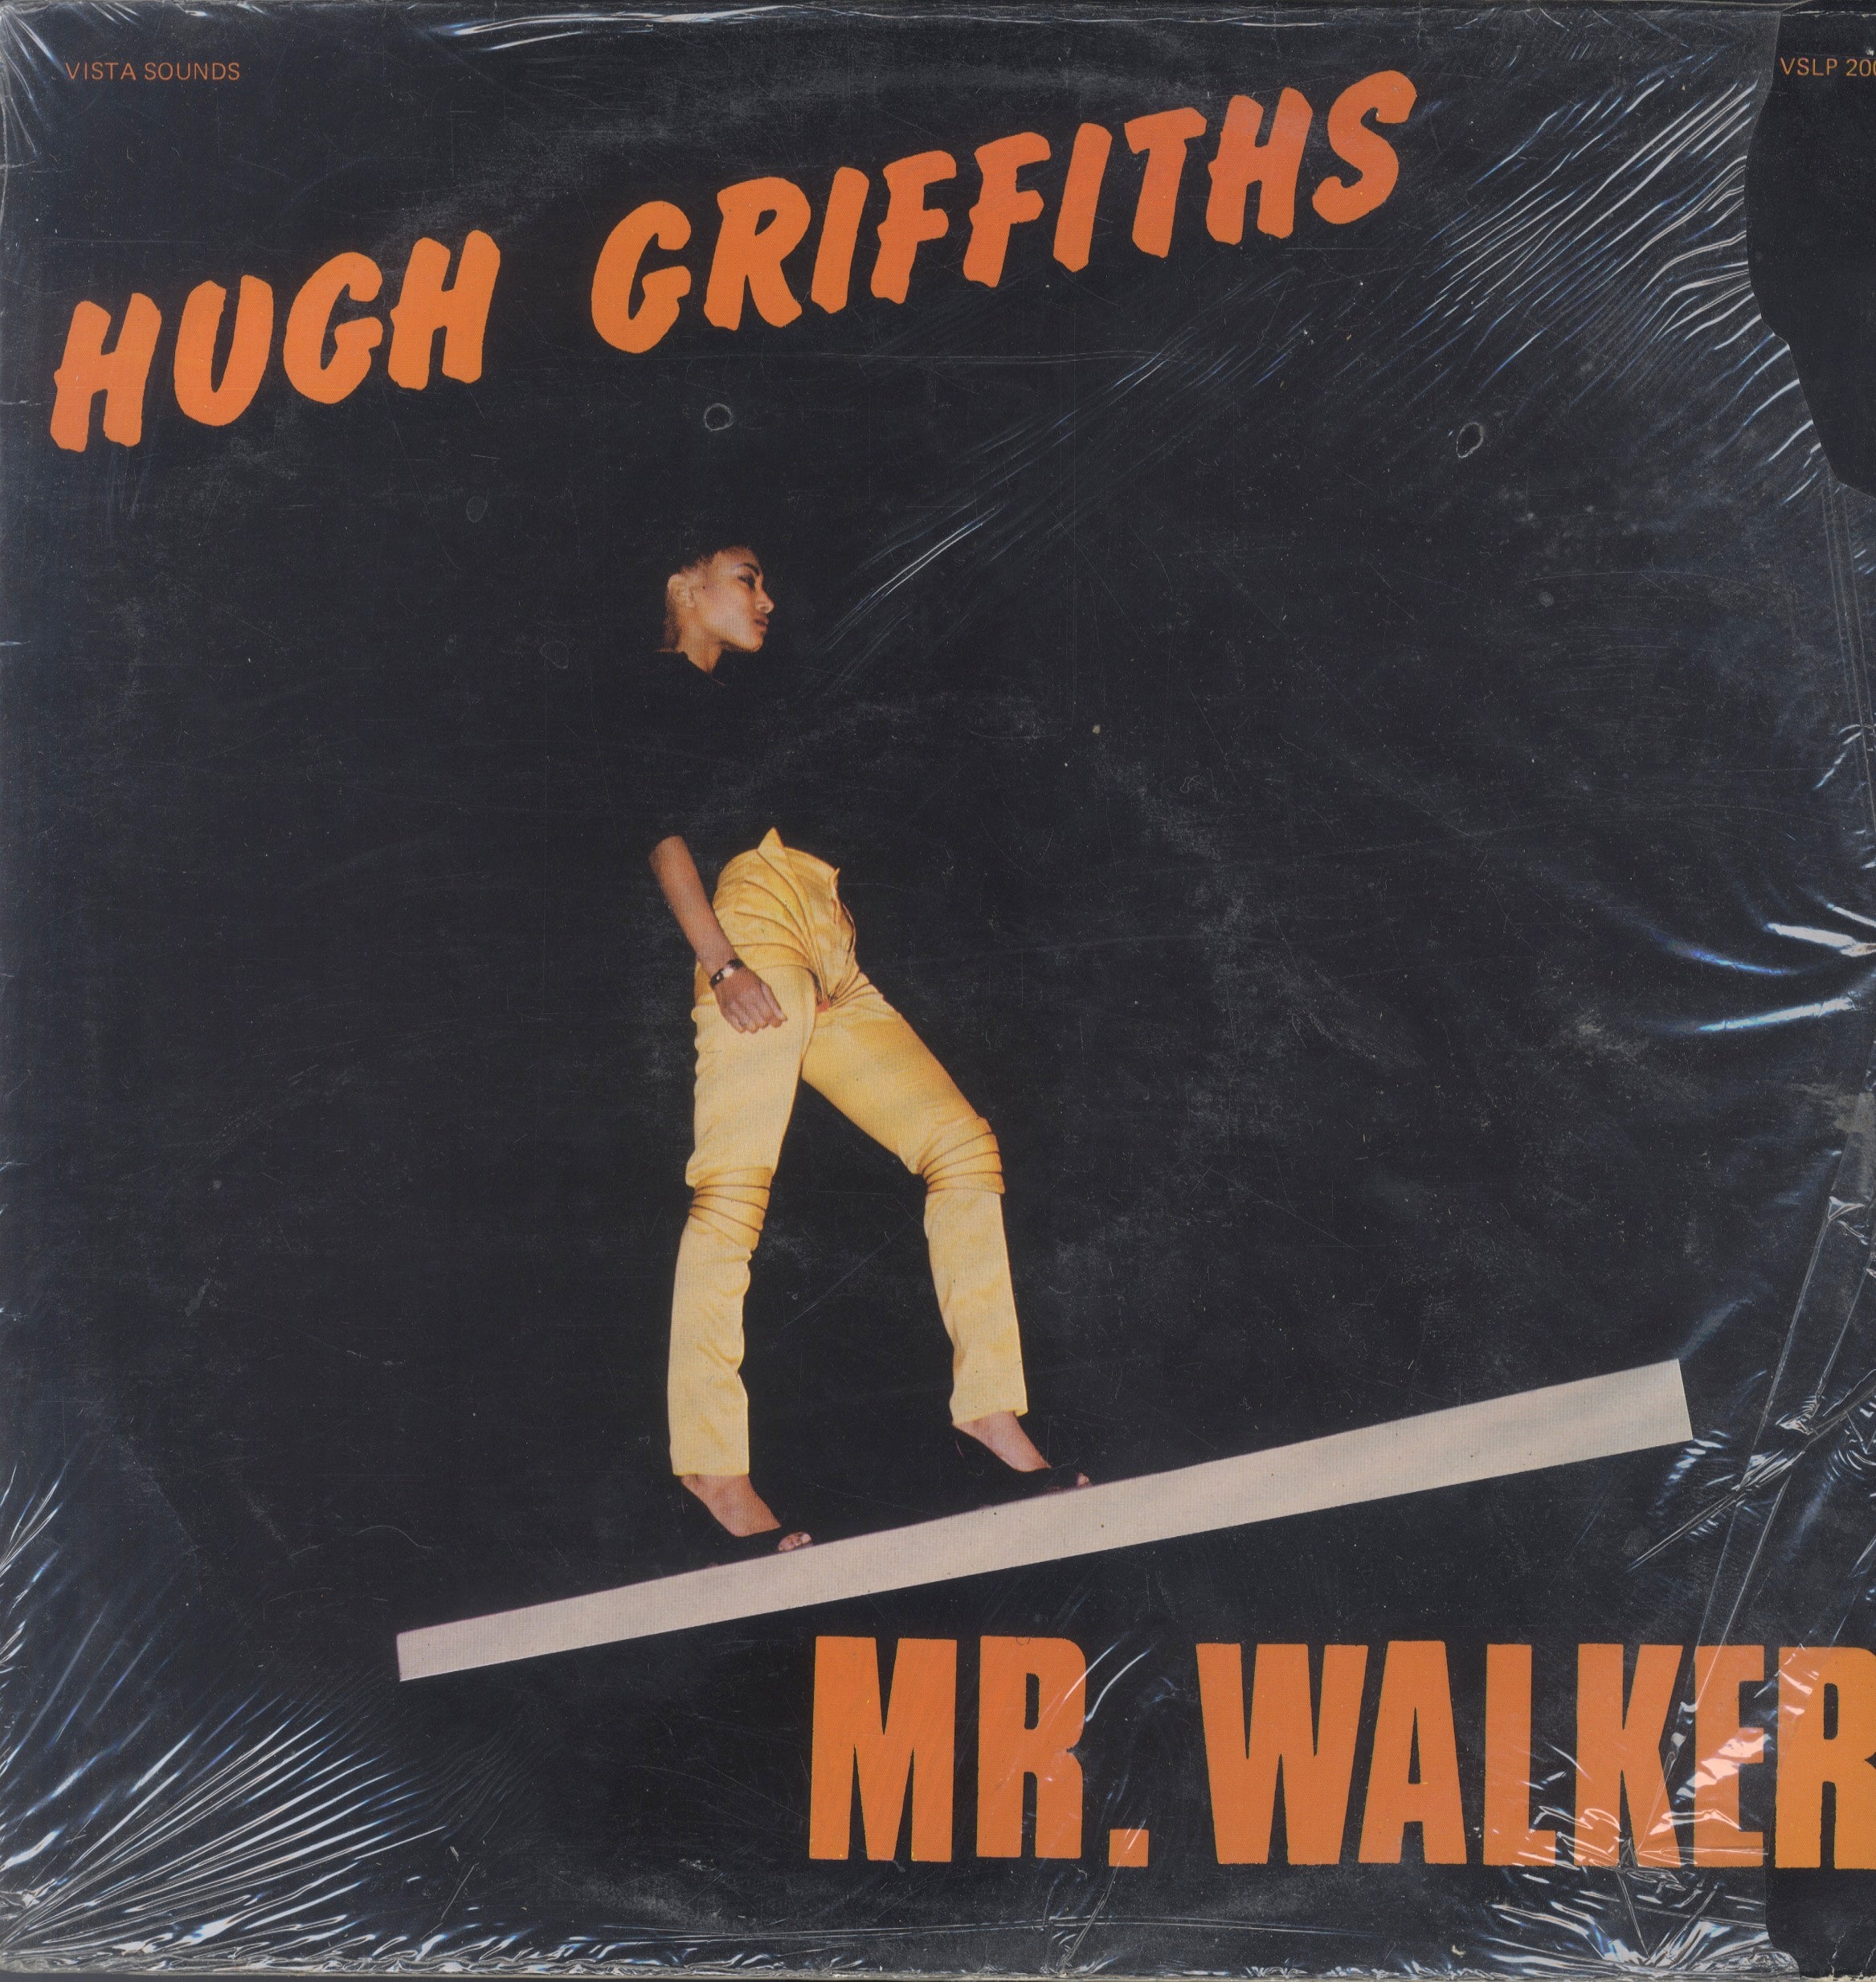 HUGH GRIFFITHS [Mr Walker]